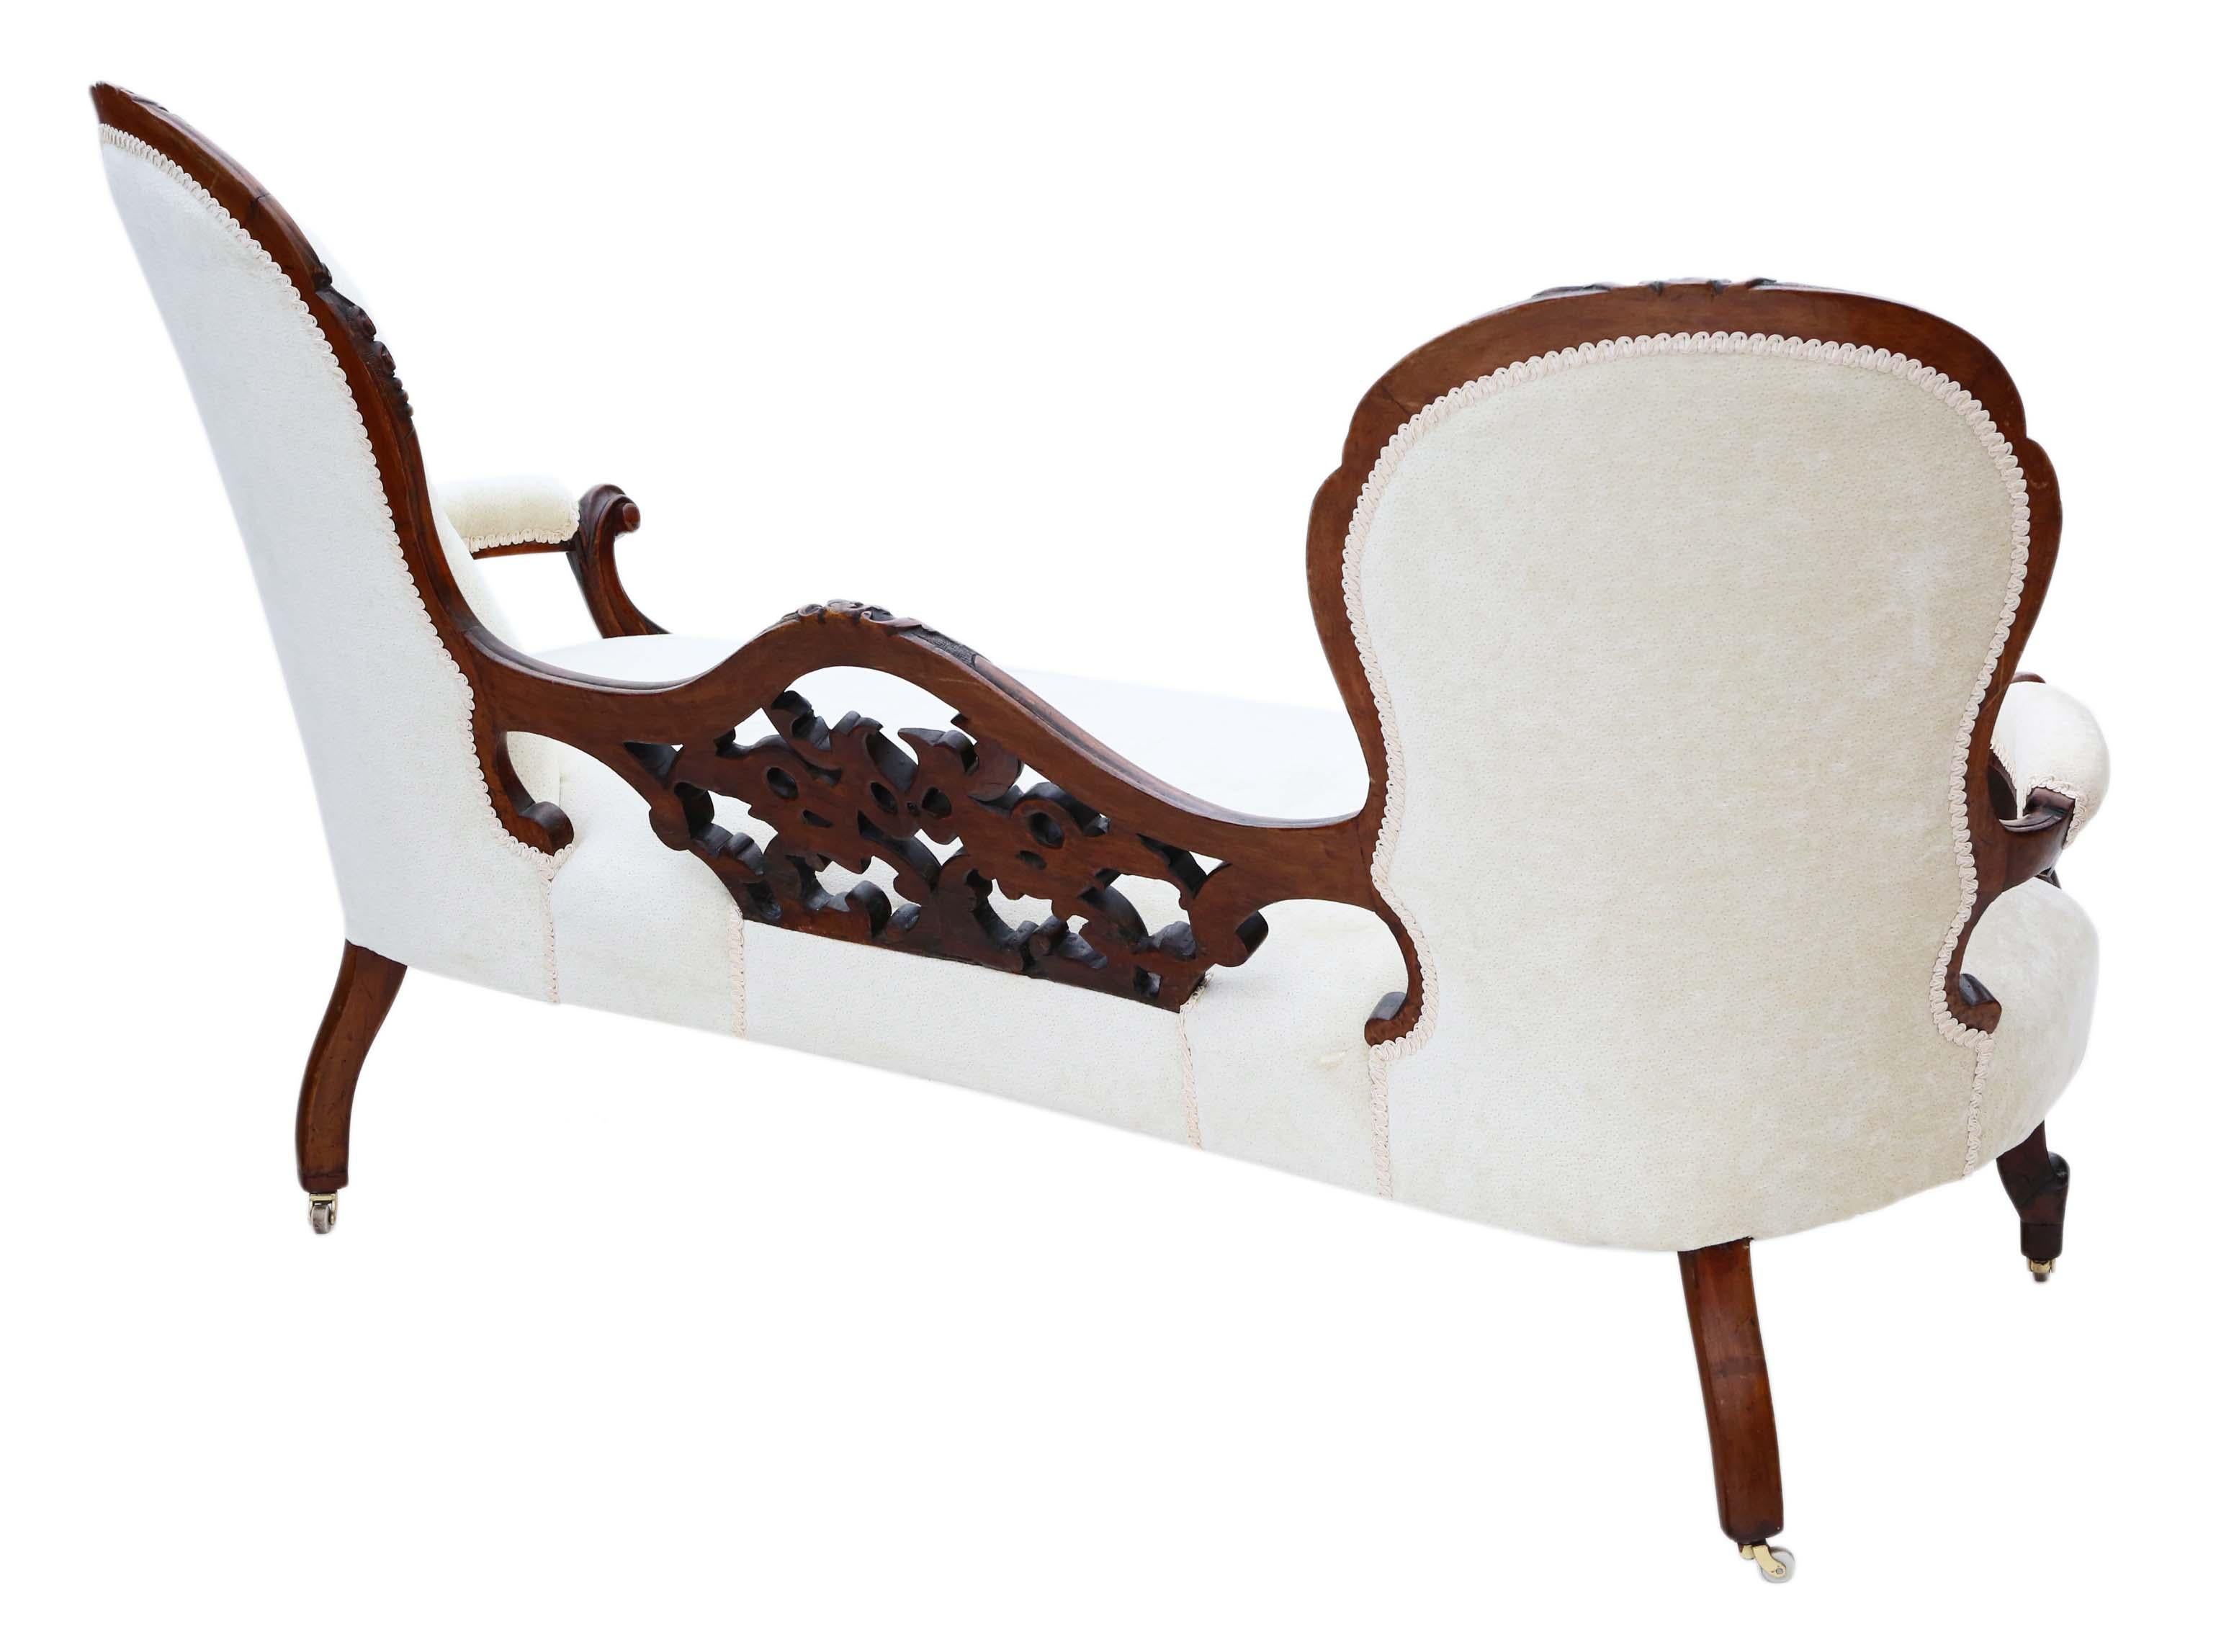 Antique Victorian C1860 Walnut Chaise Longue or Conversation Sofa For Sale 3